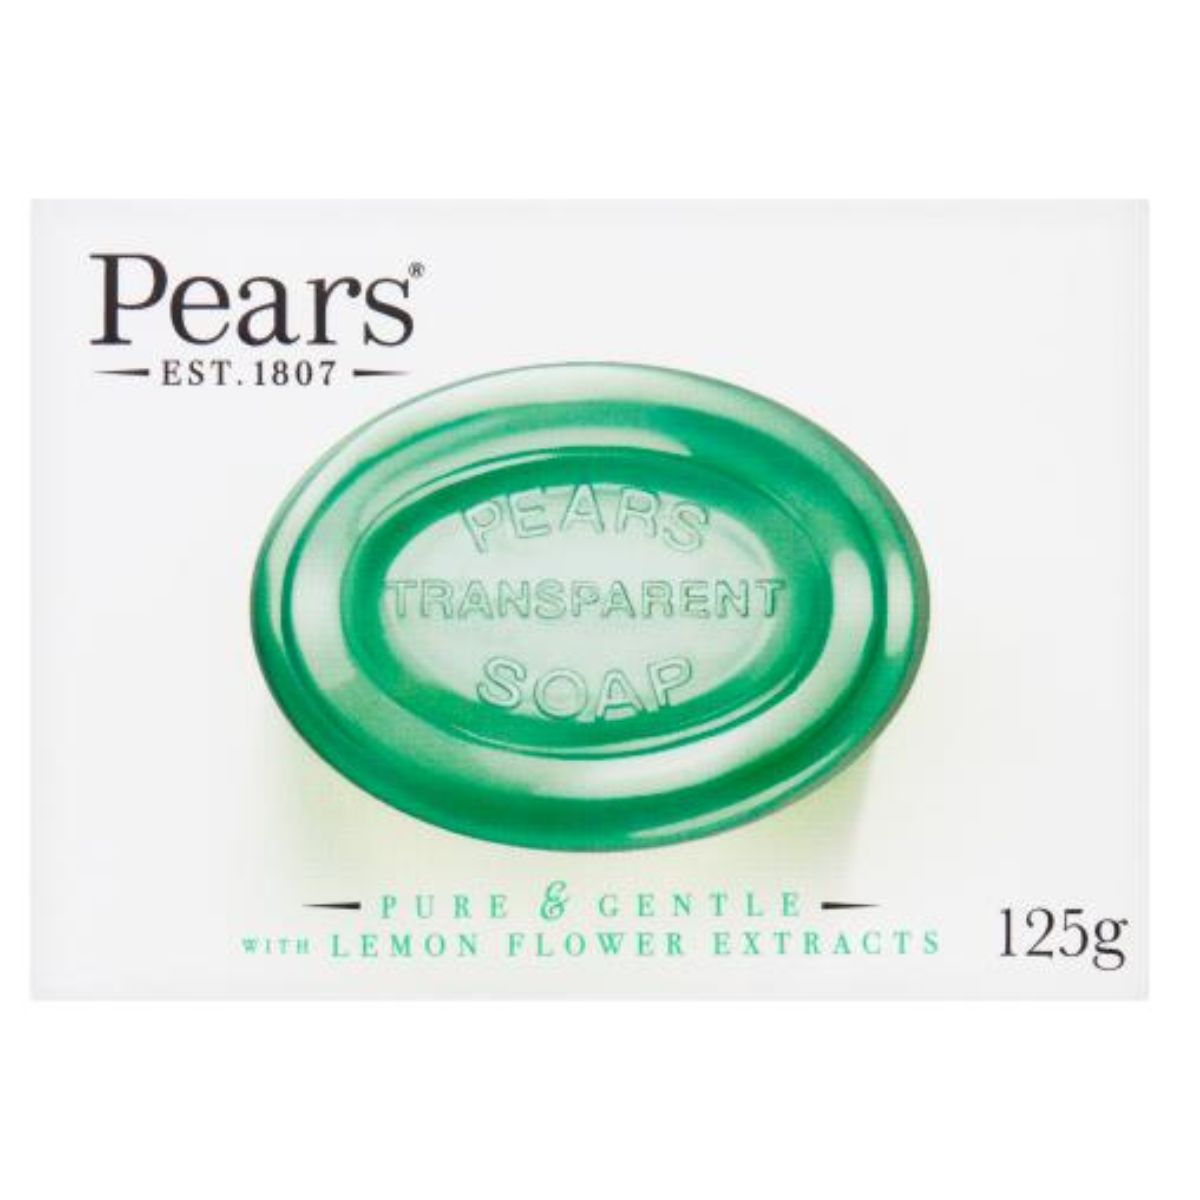 Pears - Transparent Soap with Lemon Flower Extracts - 125g with lemon flower extract.